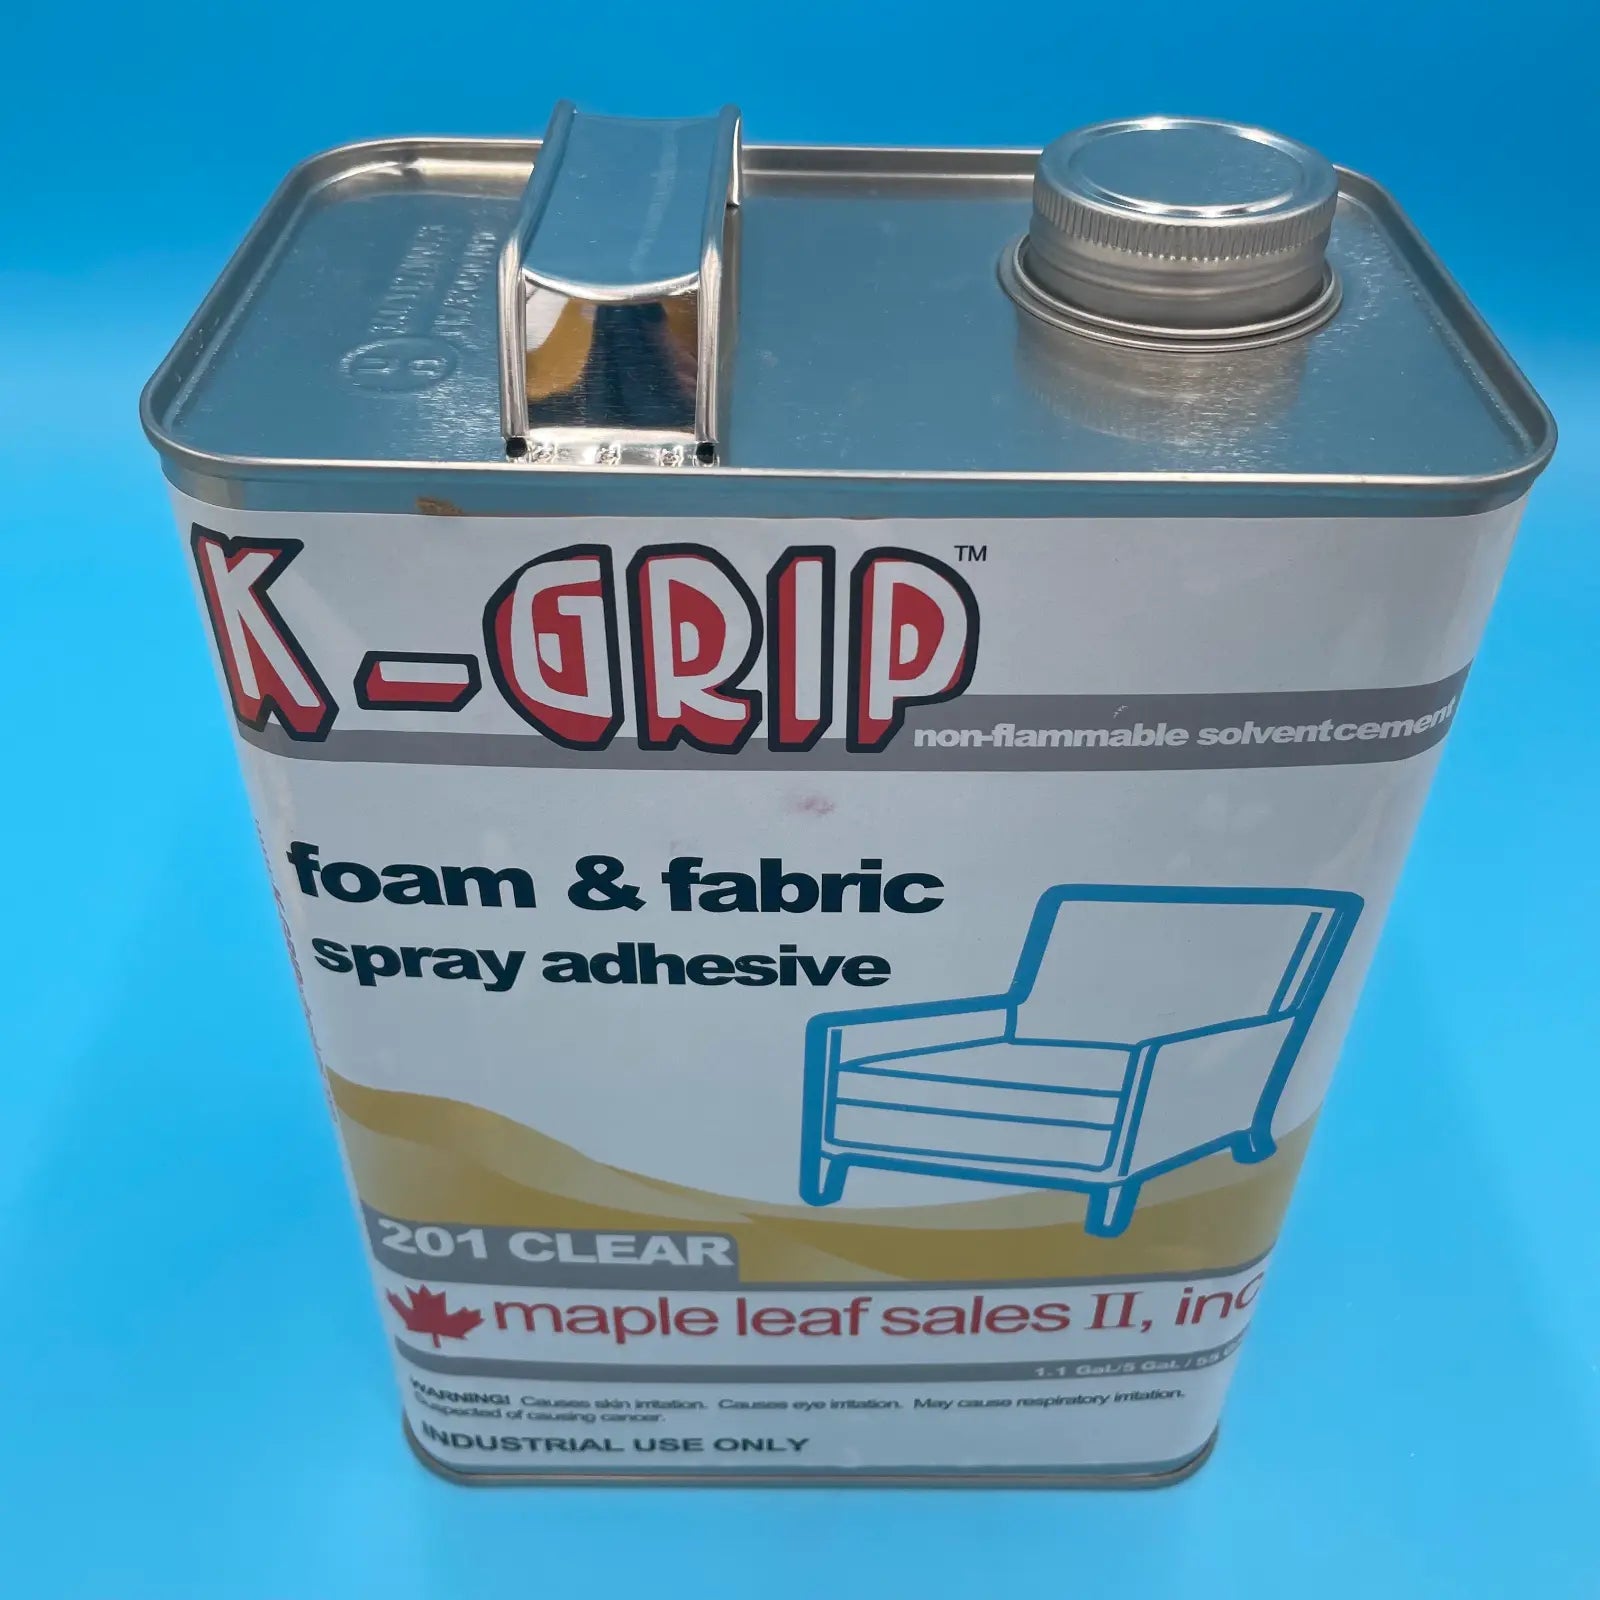 K-GRIP 201 Foam & Fabric Spray Adhesive Gallon